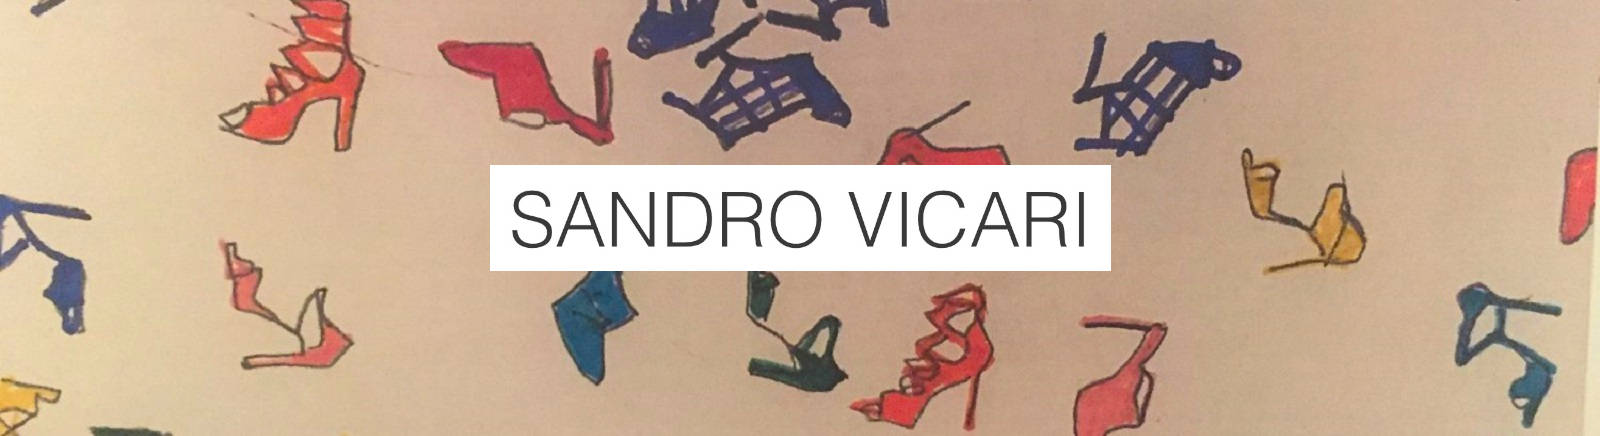 Juppen: Sandro Vicari Brautschuhe für Damen online shoppen